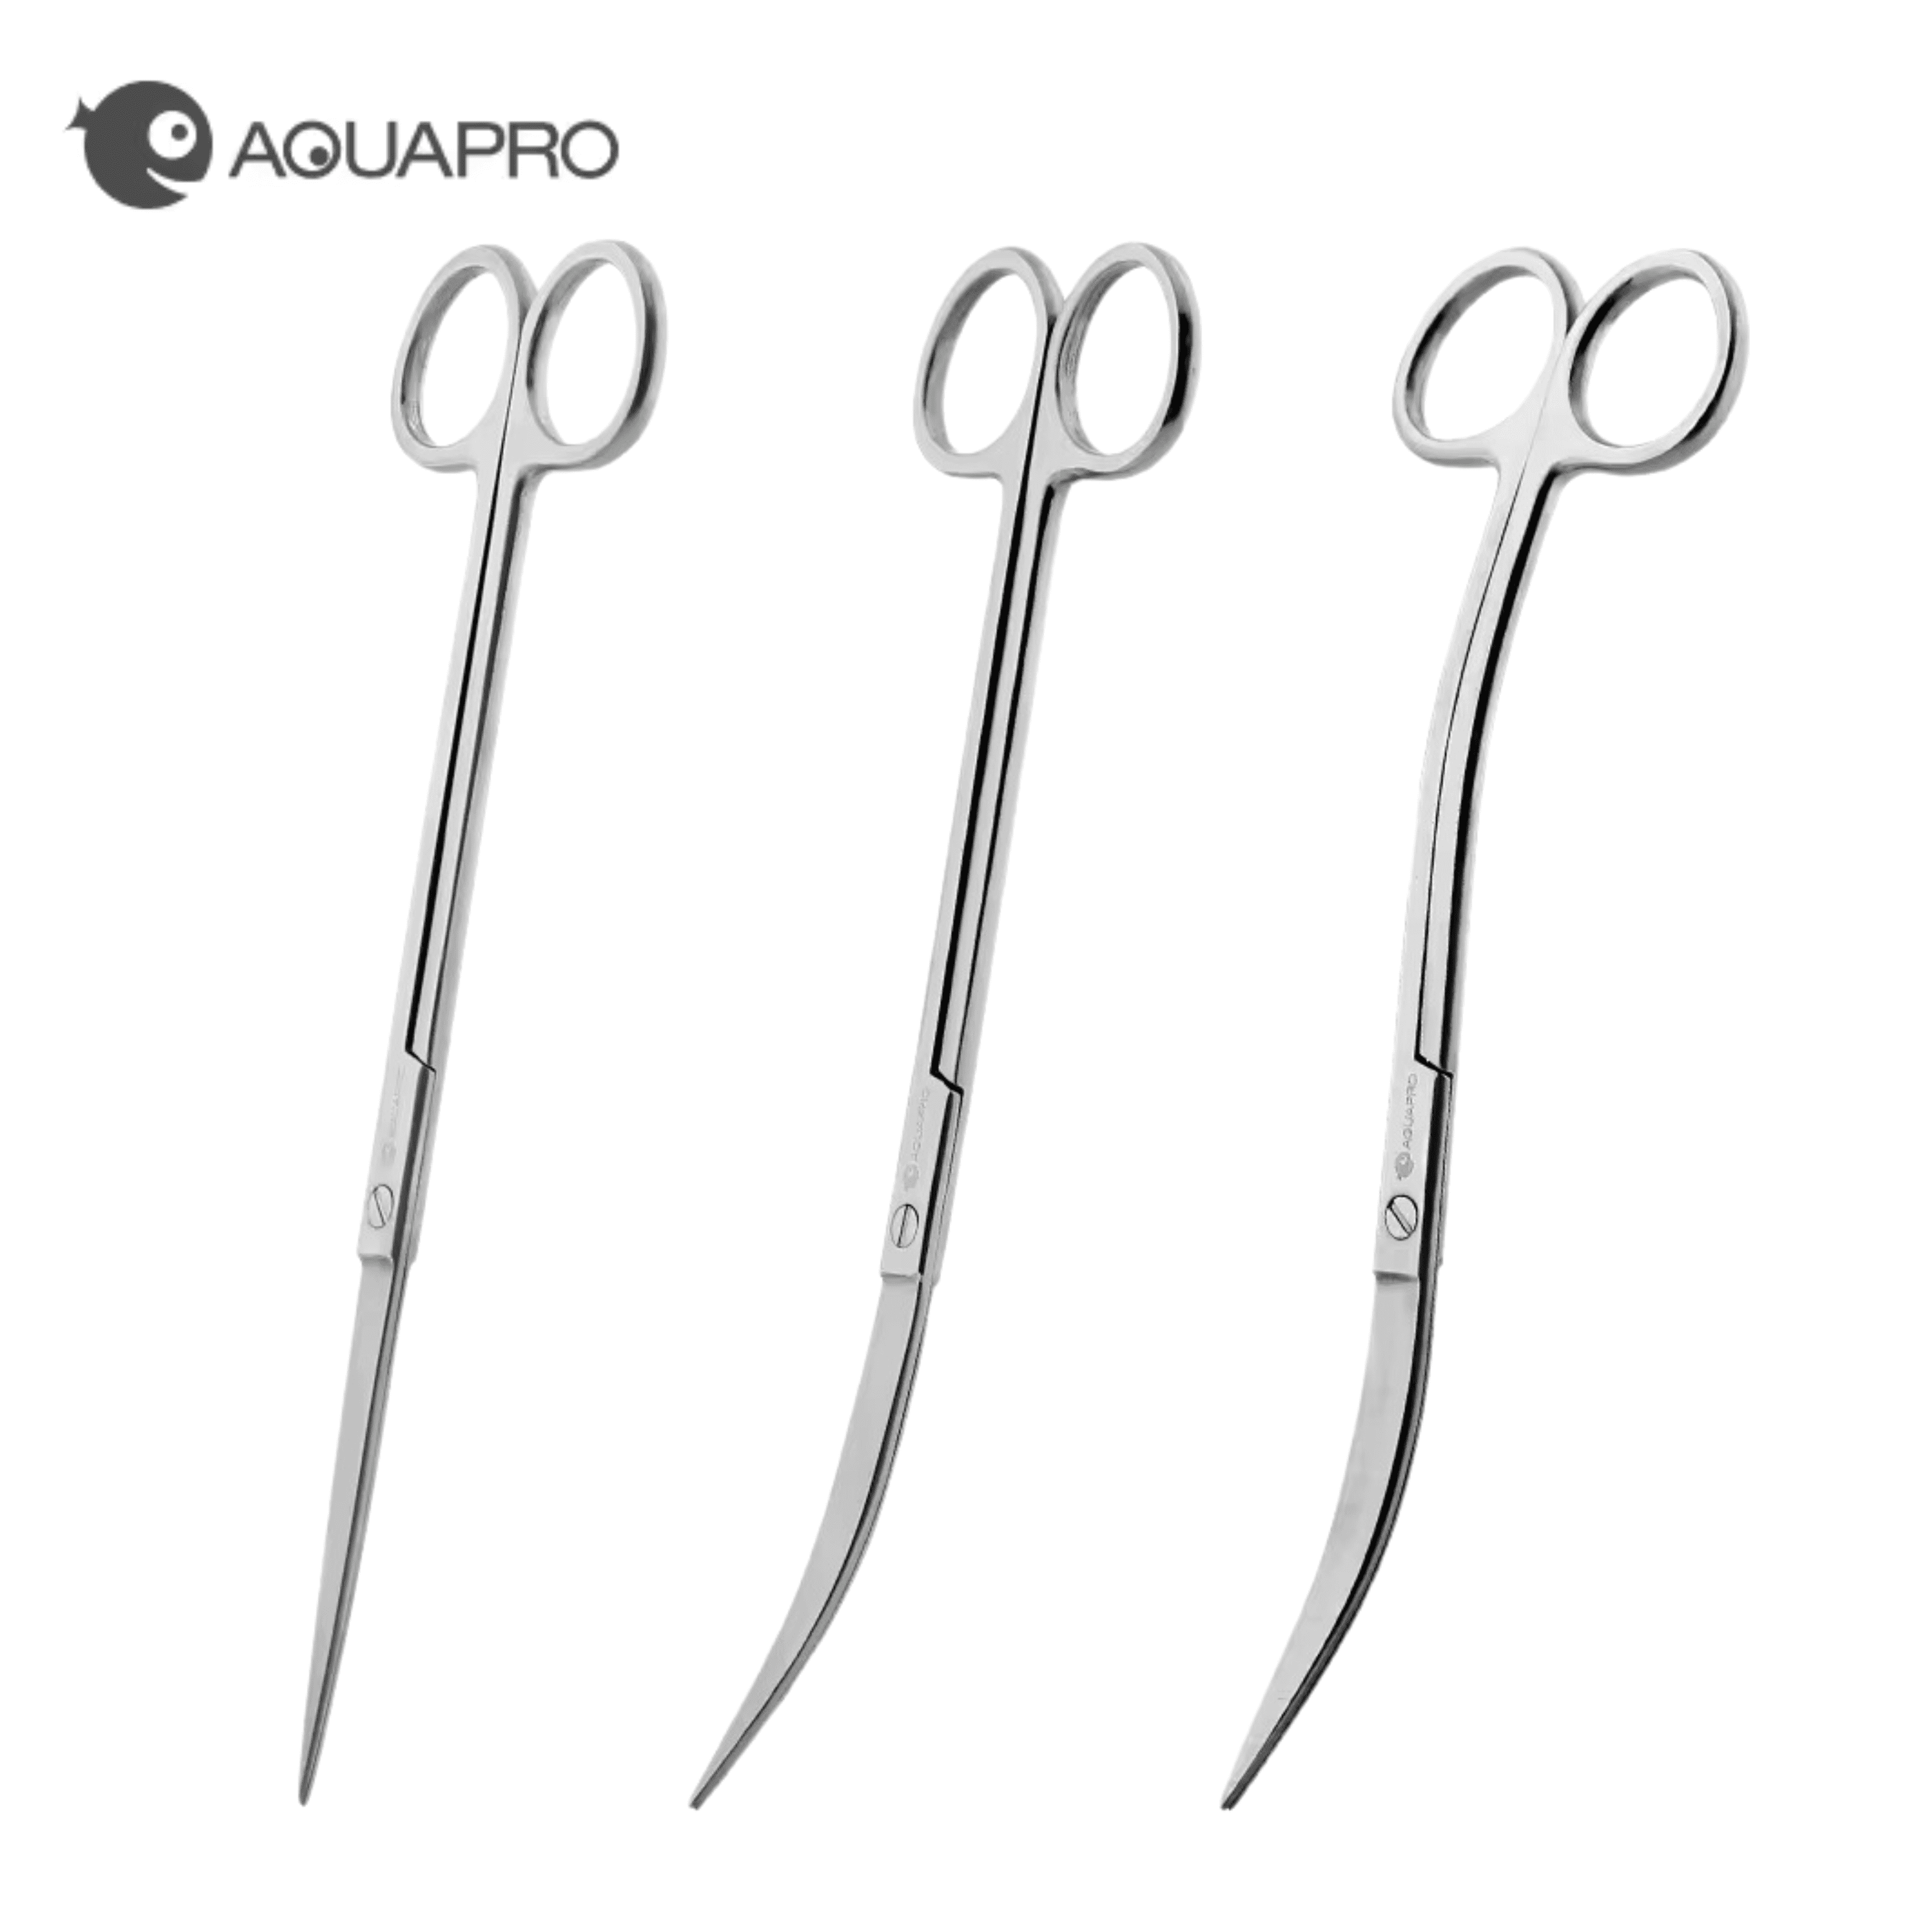 Aquapro Pro Scissors - Silver